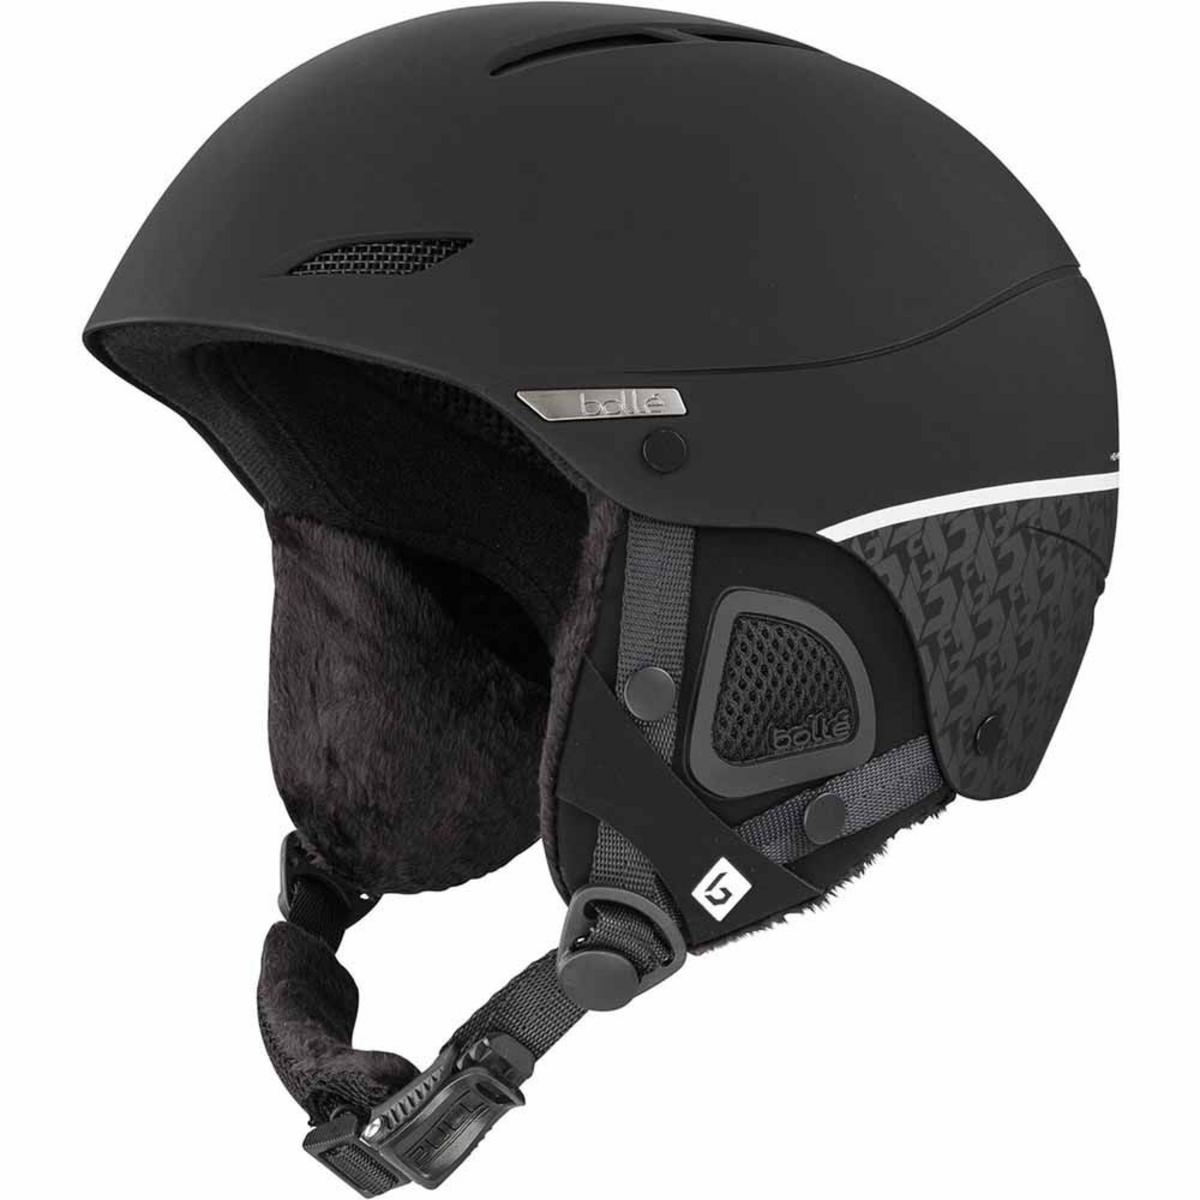 Bolle Women's Juliet Ski Helmet